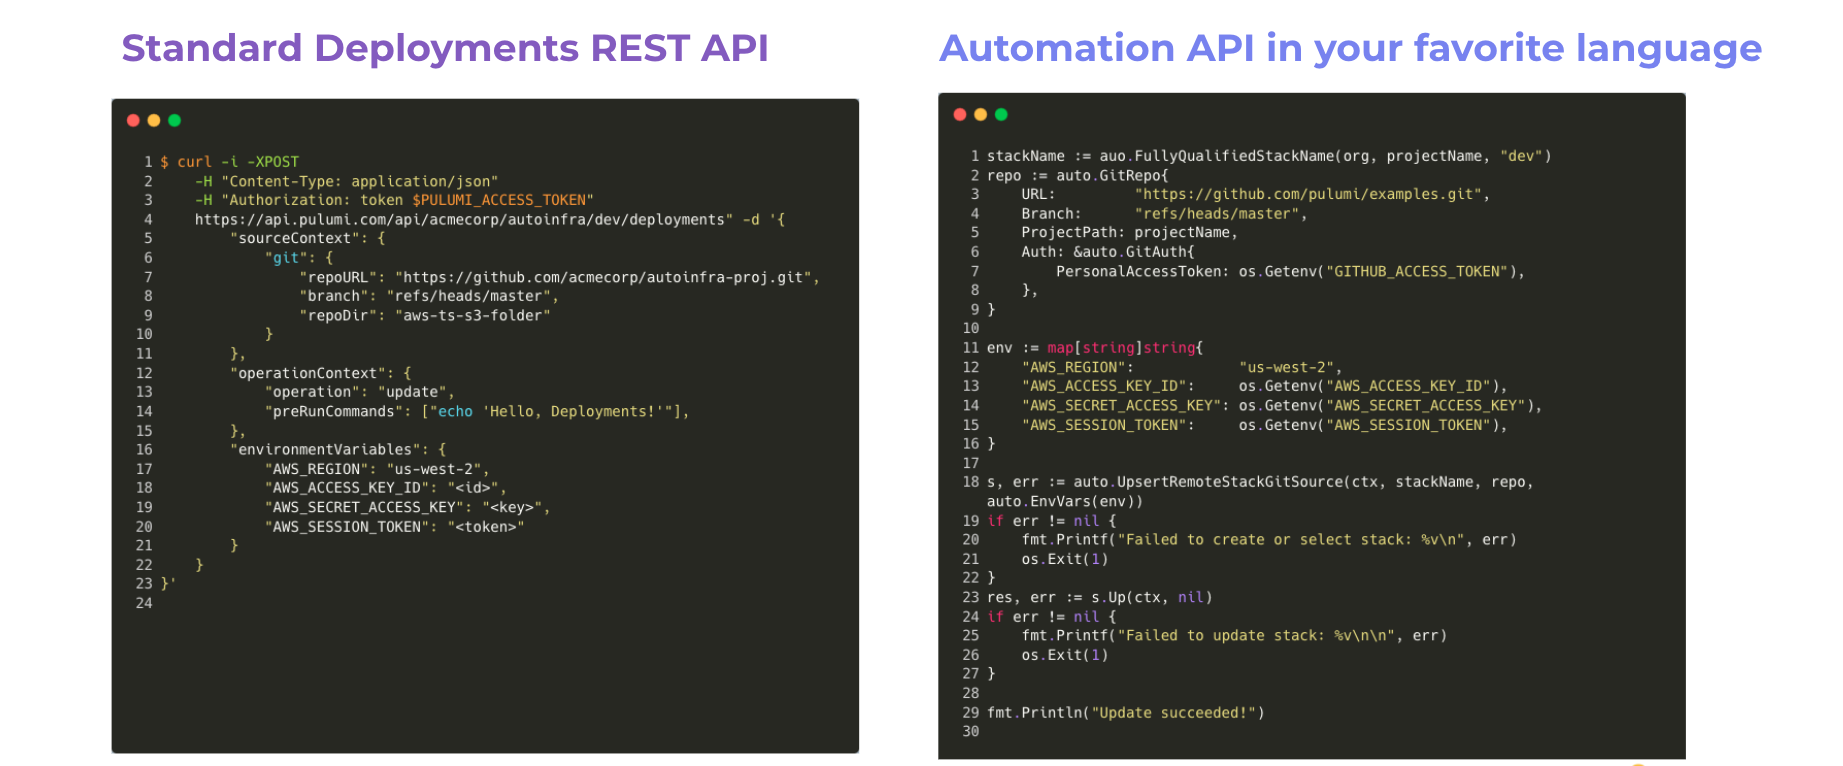 Pulumi Deployments REST API and Automation API